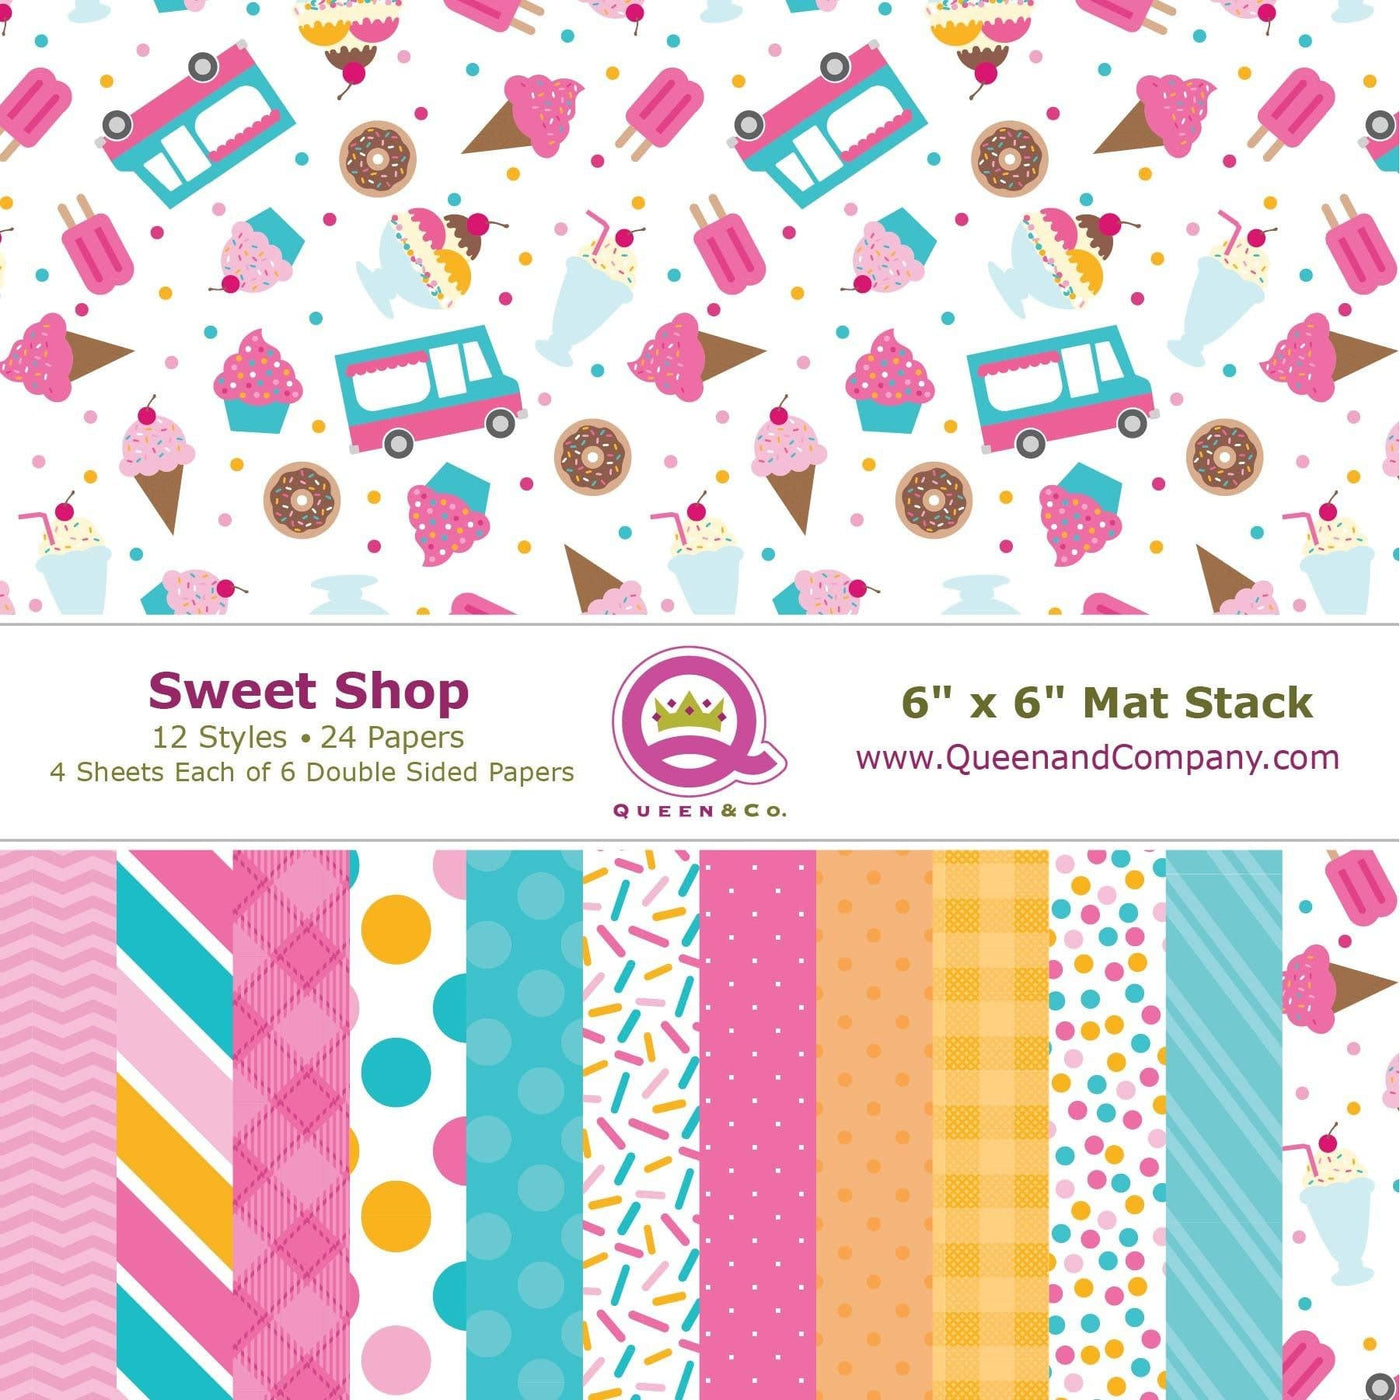 Sweet Shop Paper Pad